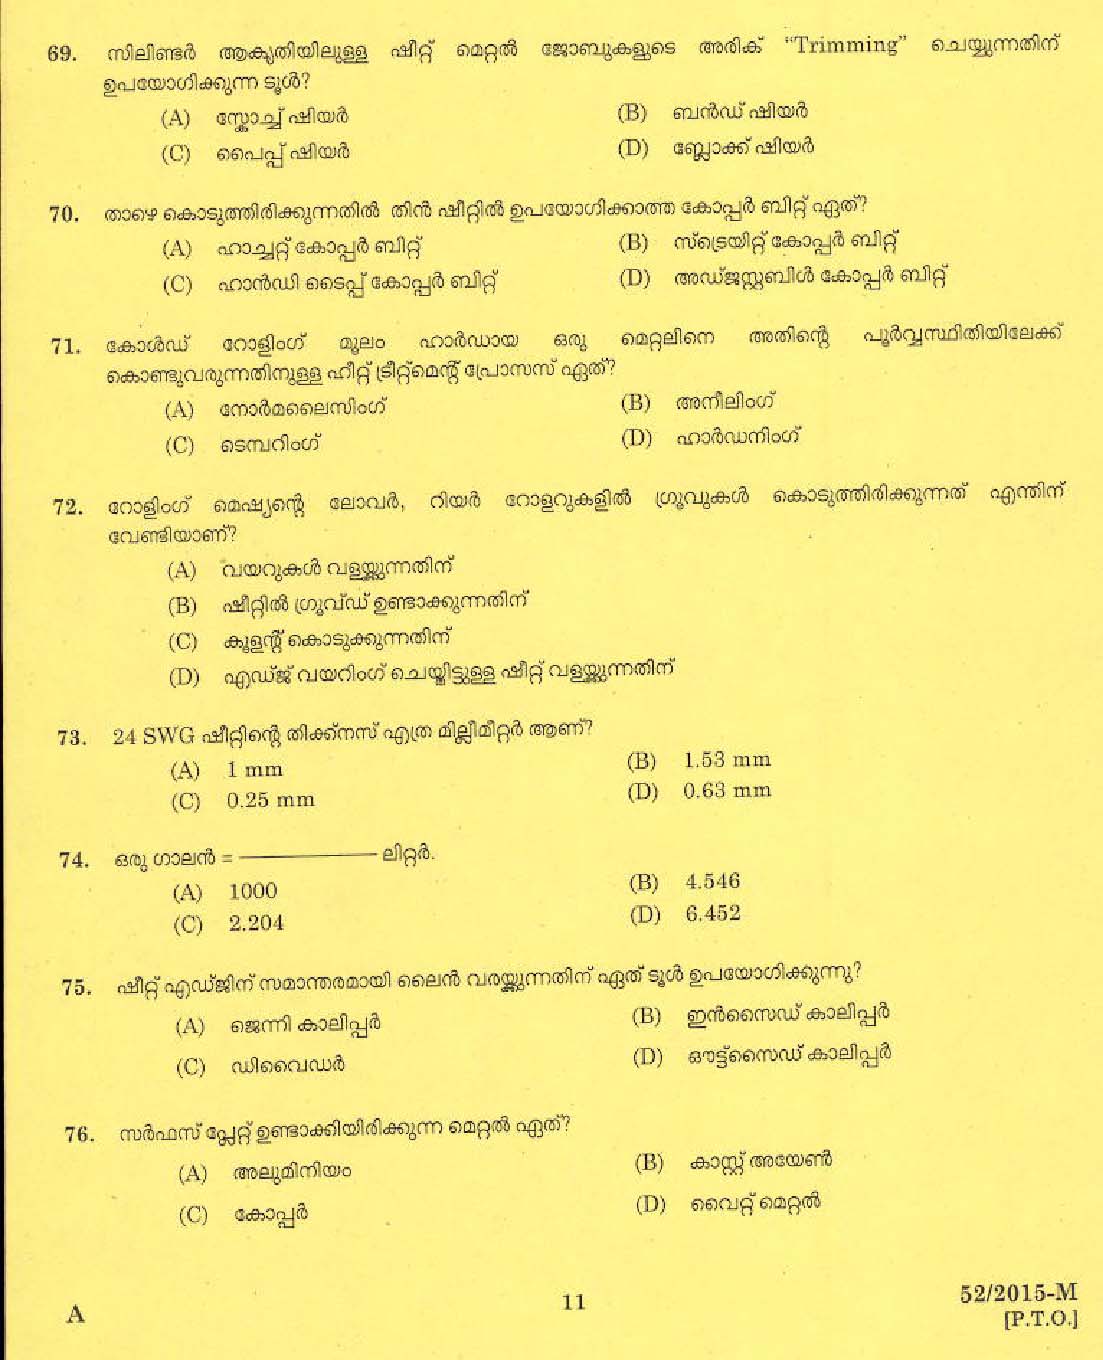 KPSC Tradesman Sheet Metal Exam 2015 Code 522015 M 9